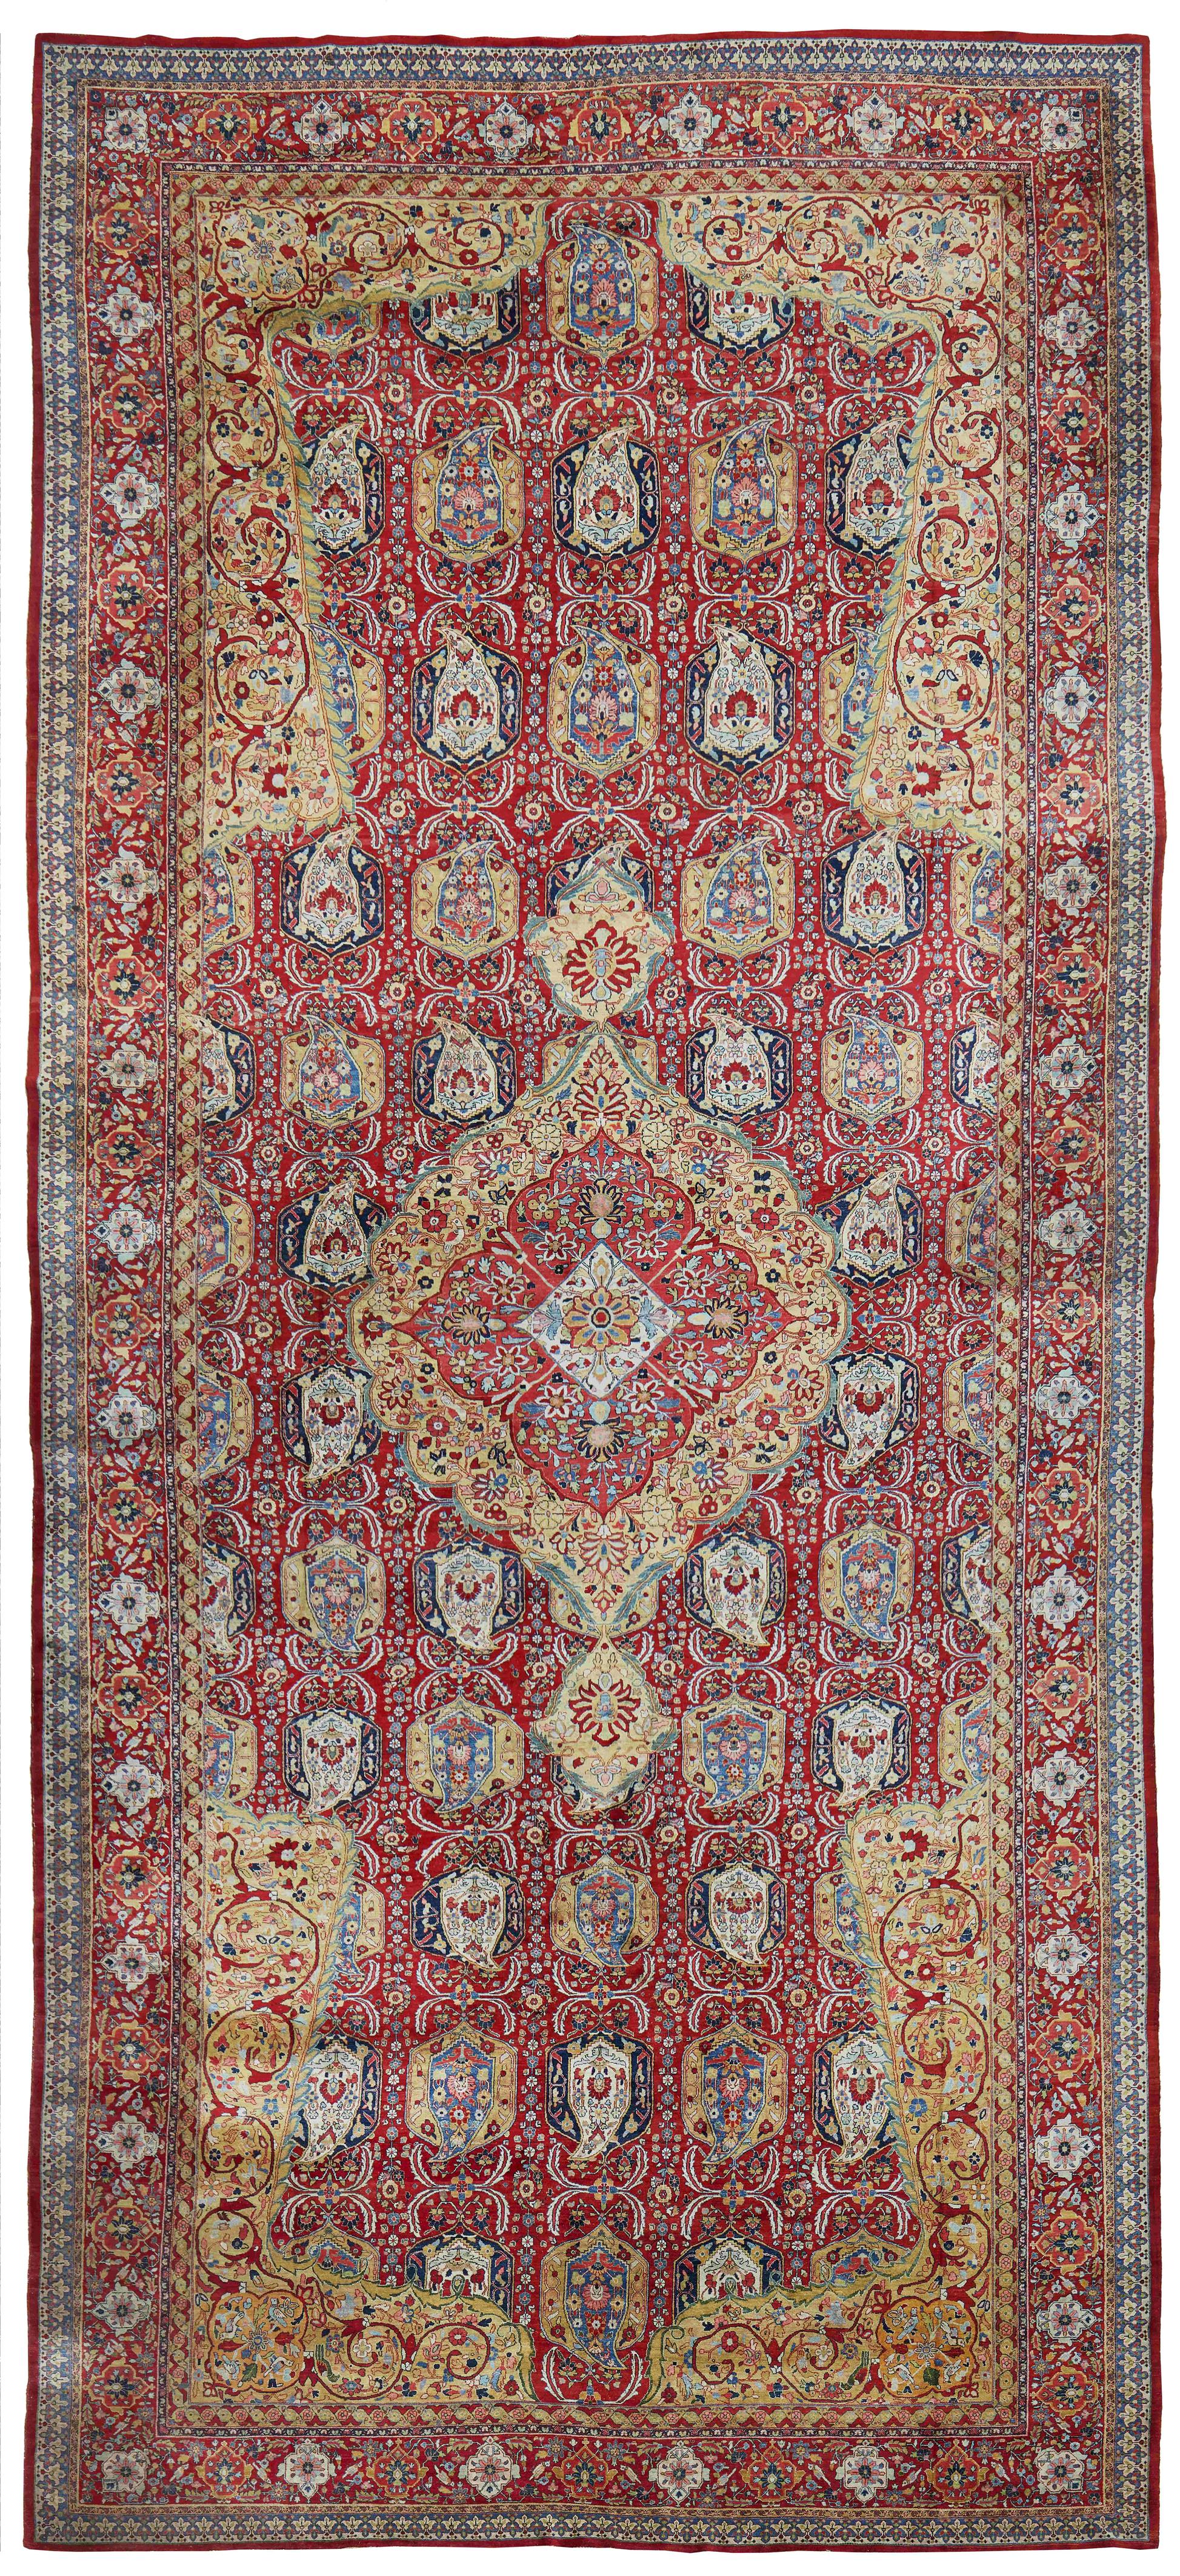 The Cologne City Hall Carpets
An Iranian carpet - image-1